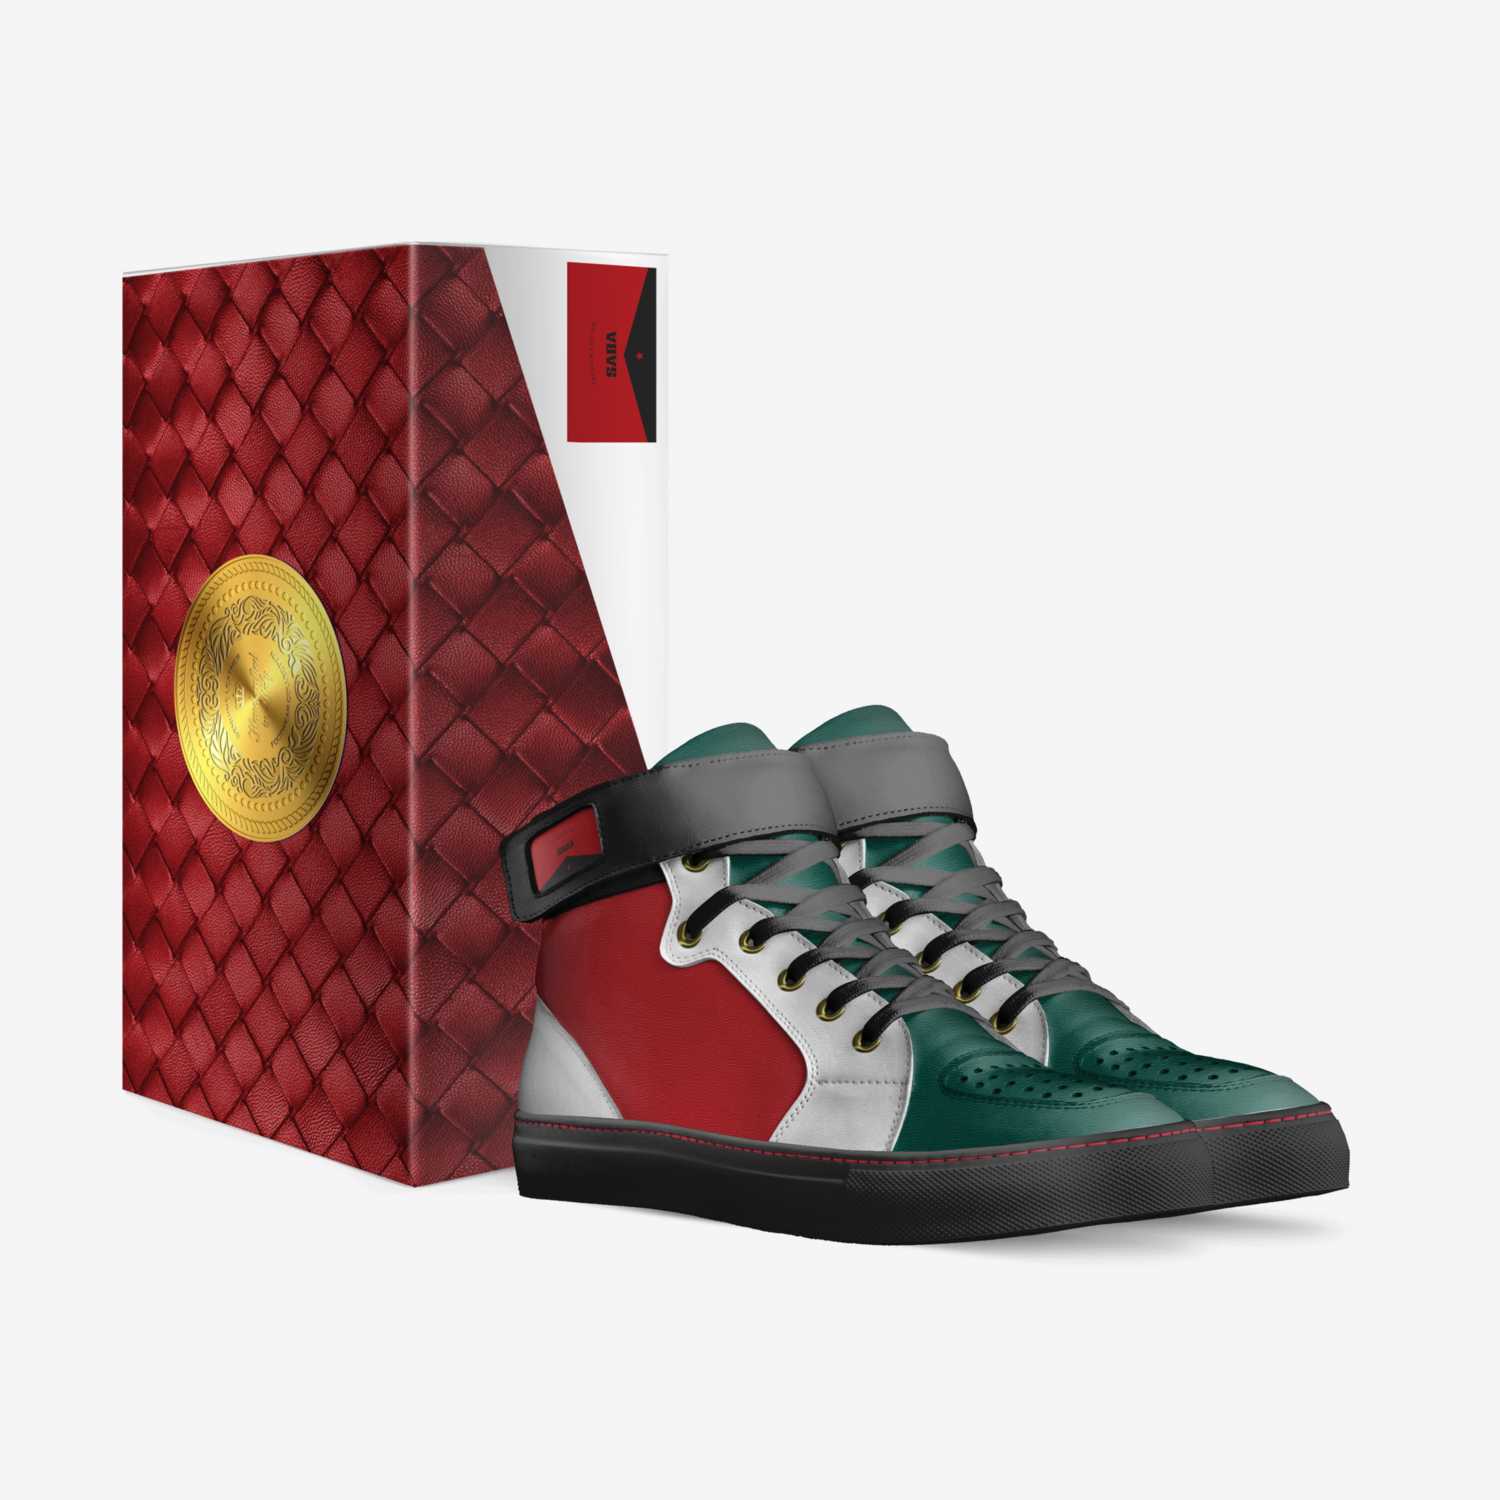 SABA custom made in Italy shoes by Njuwa Maina | Box view